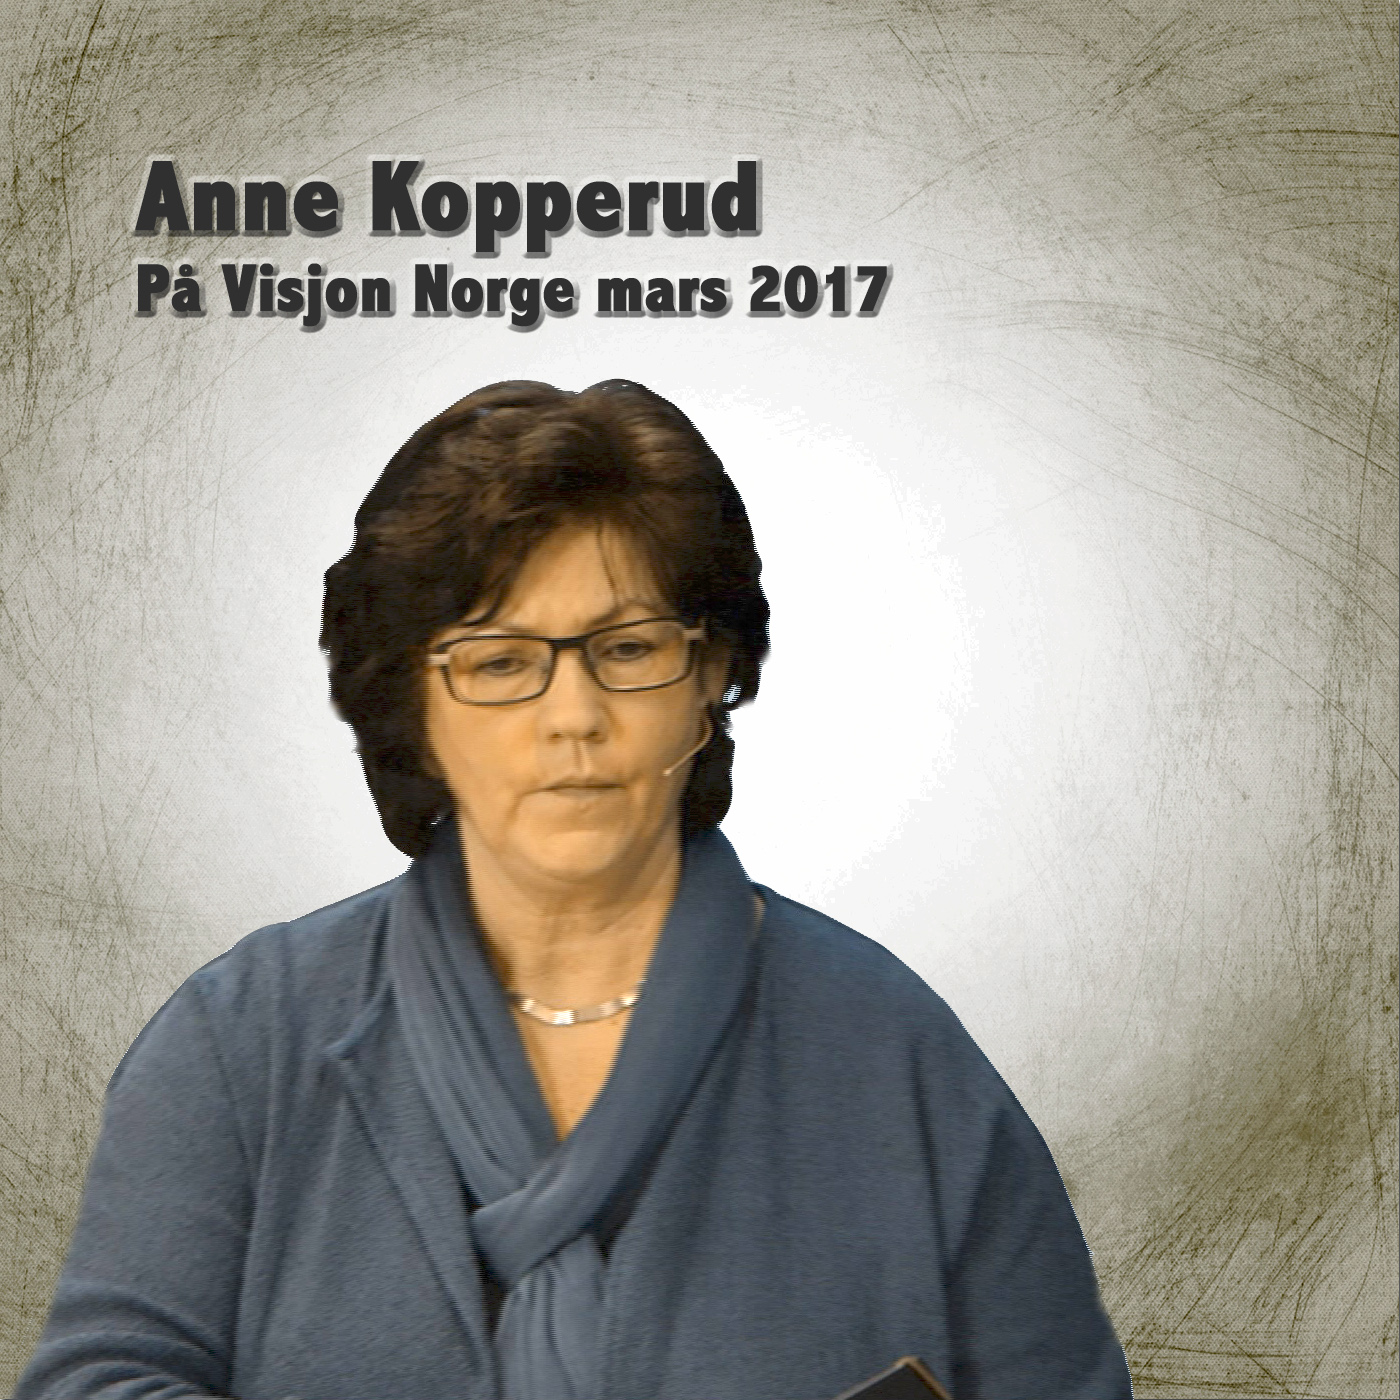 Anne Kopperud